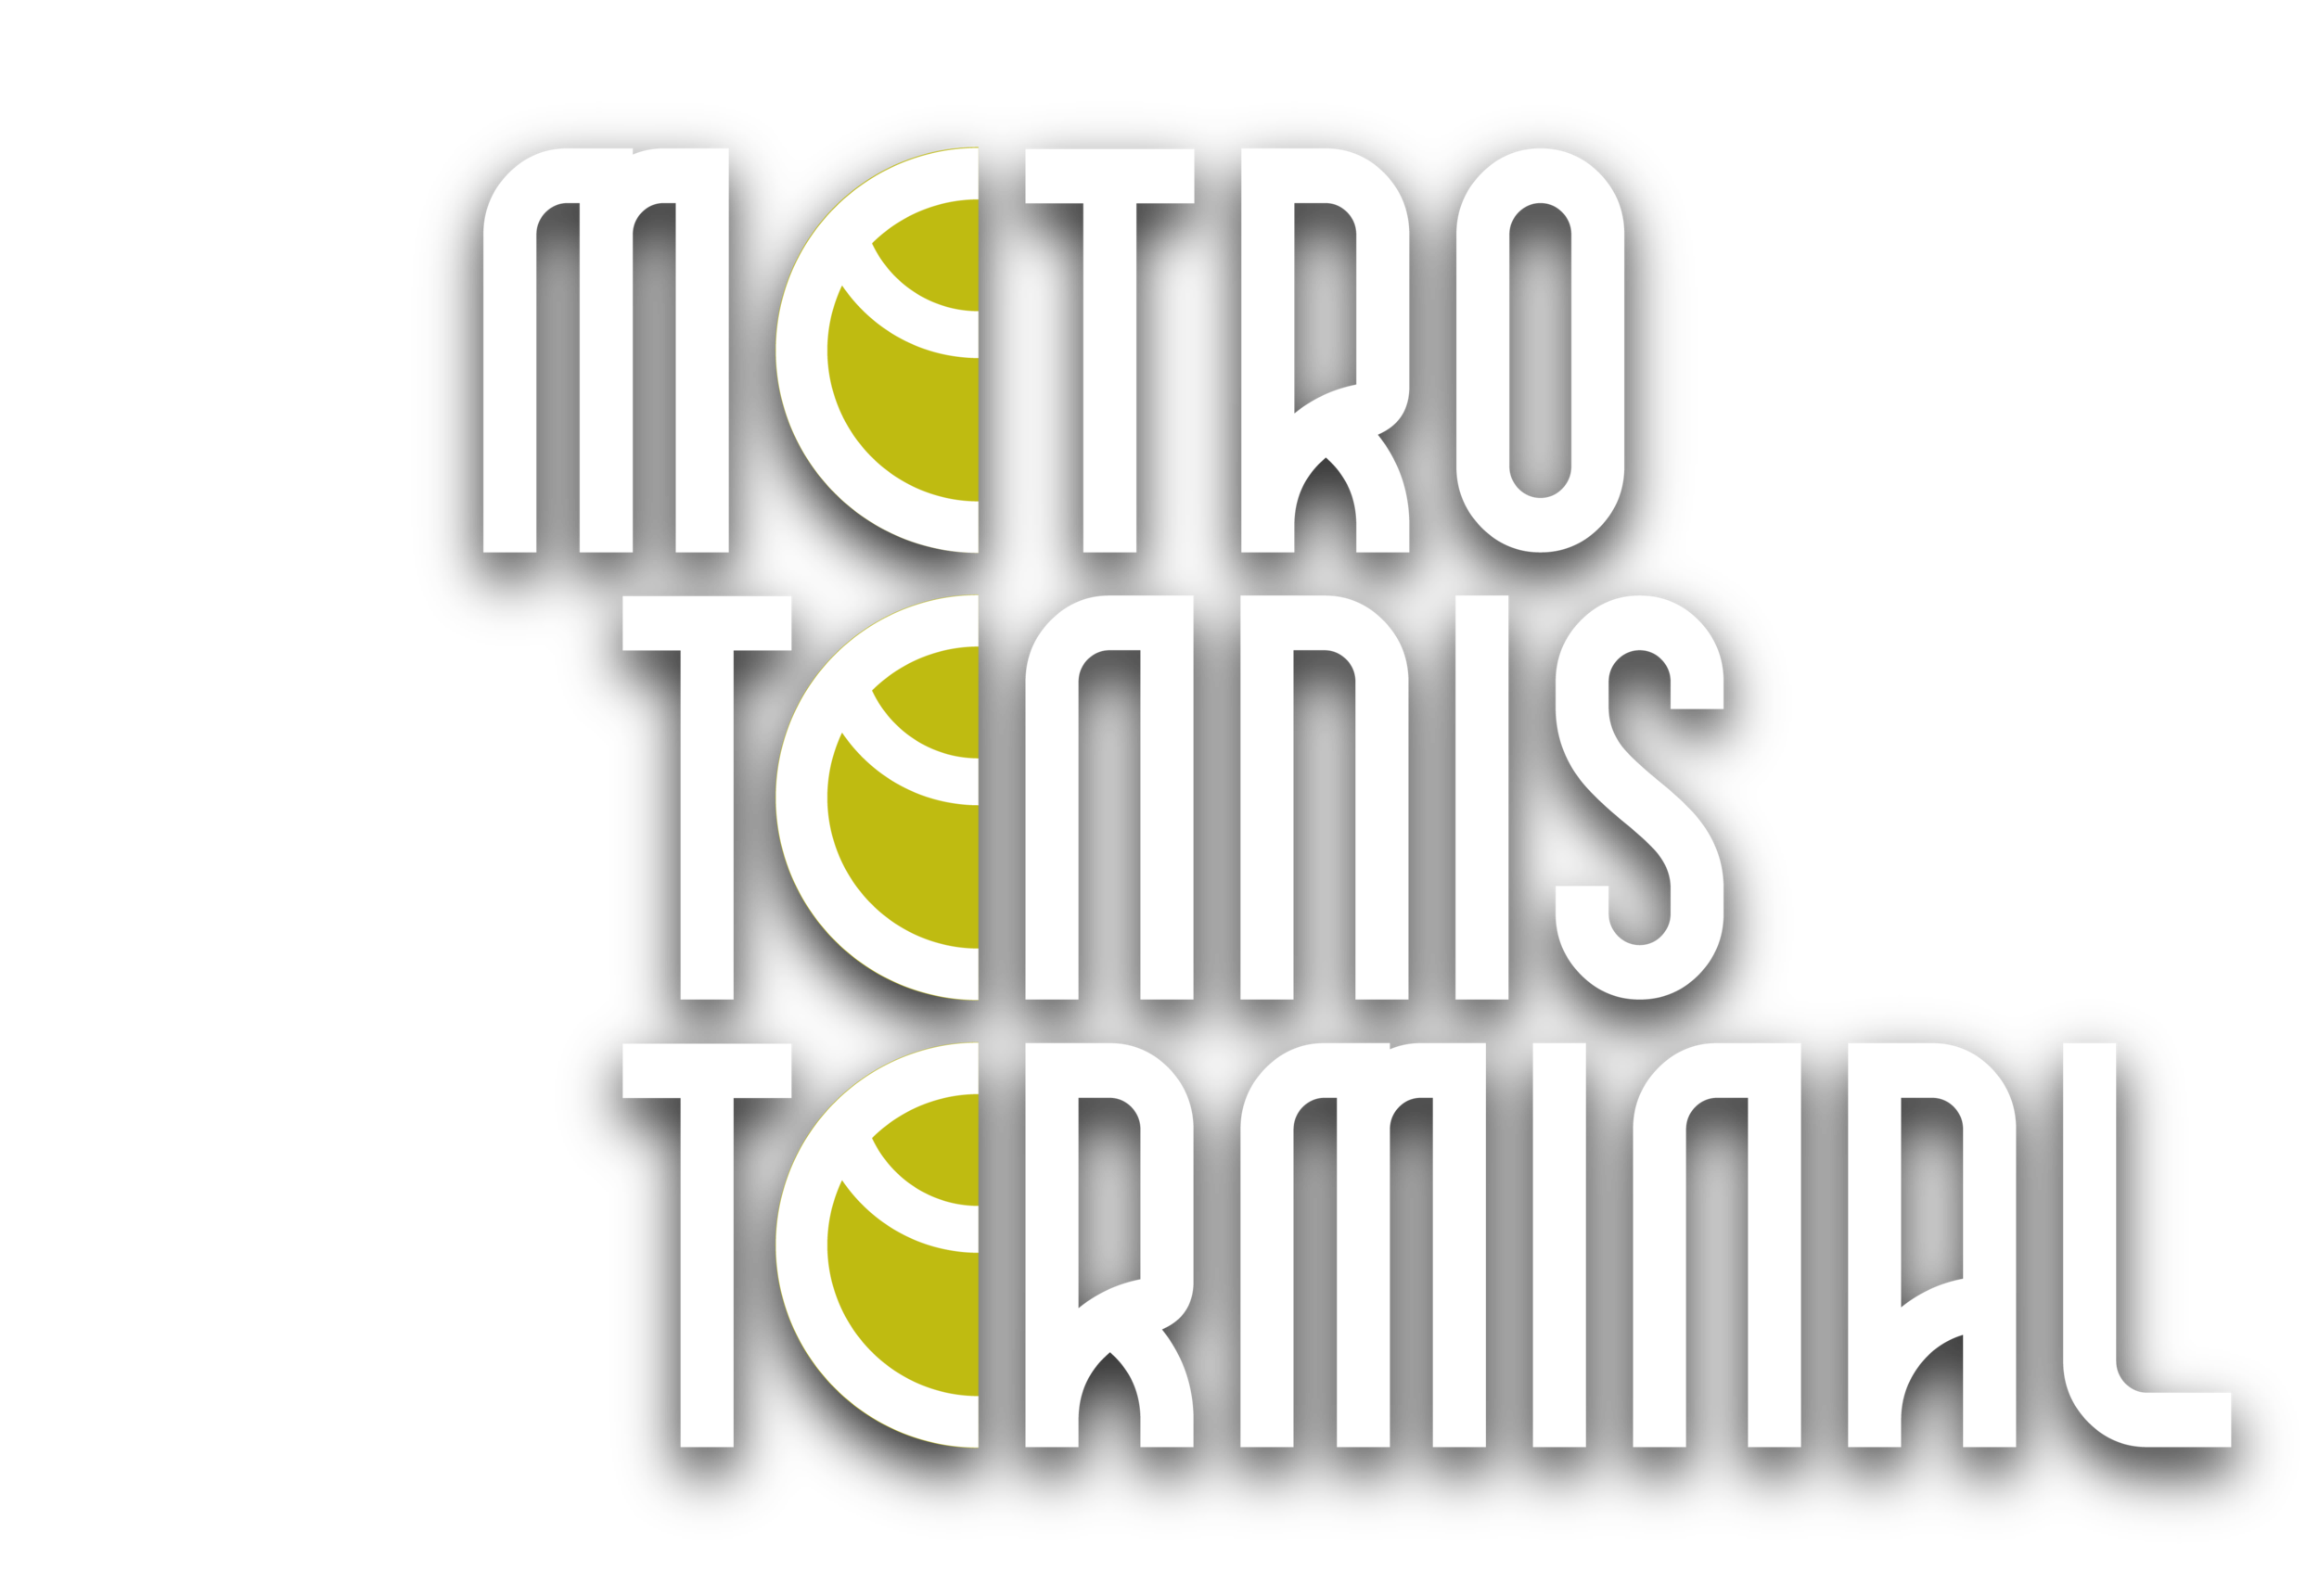 Metro Tennis Terminal